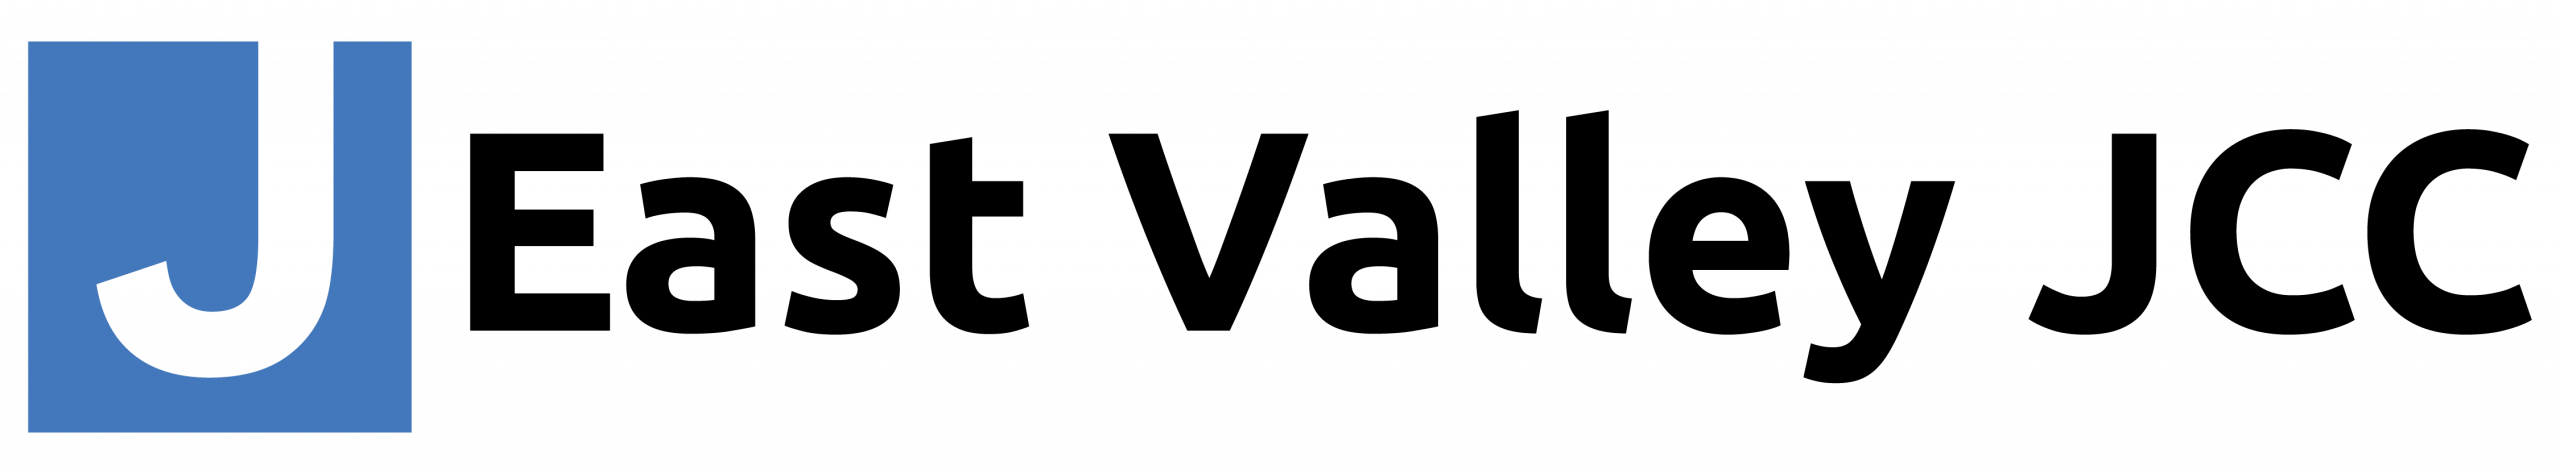 EVJCC logo